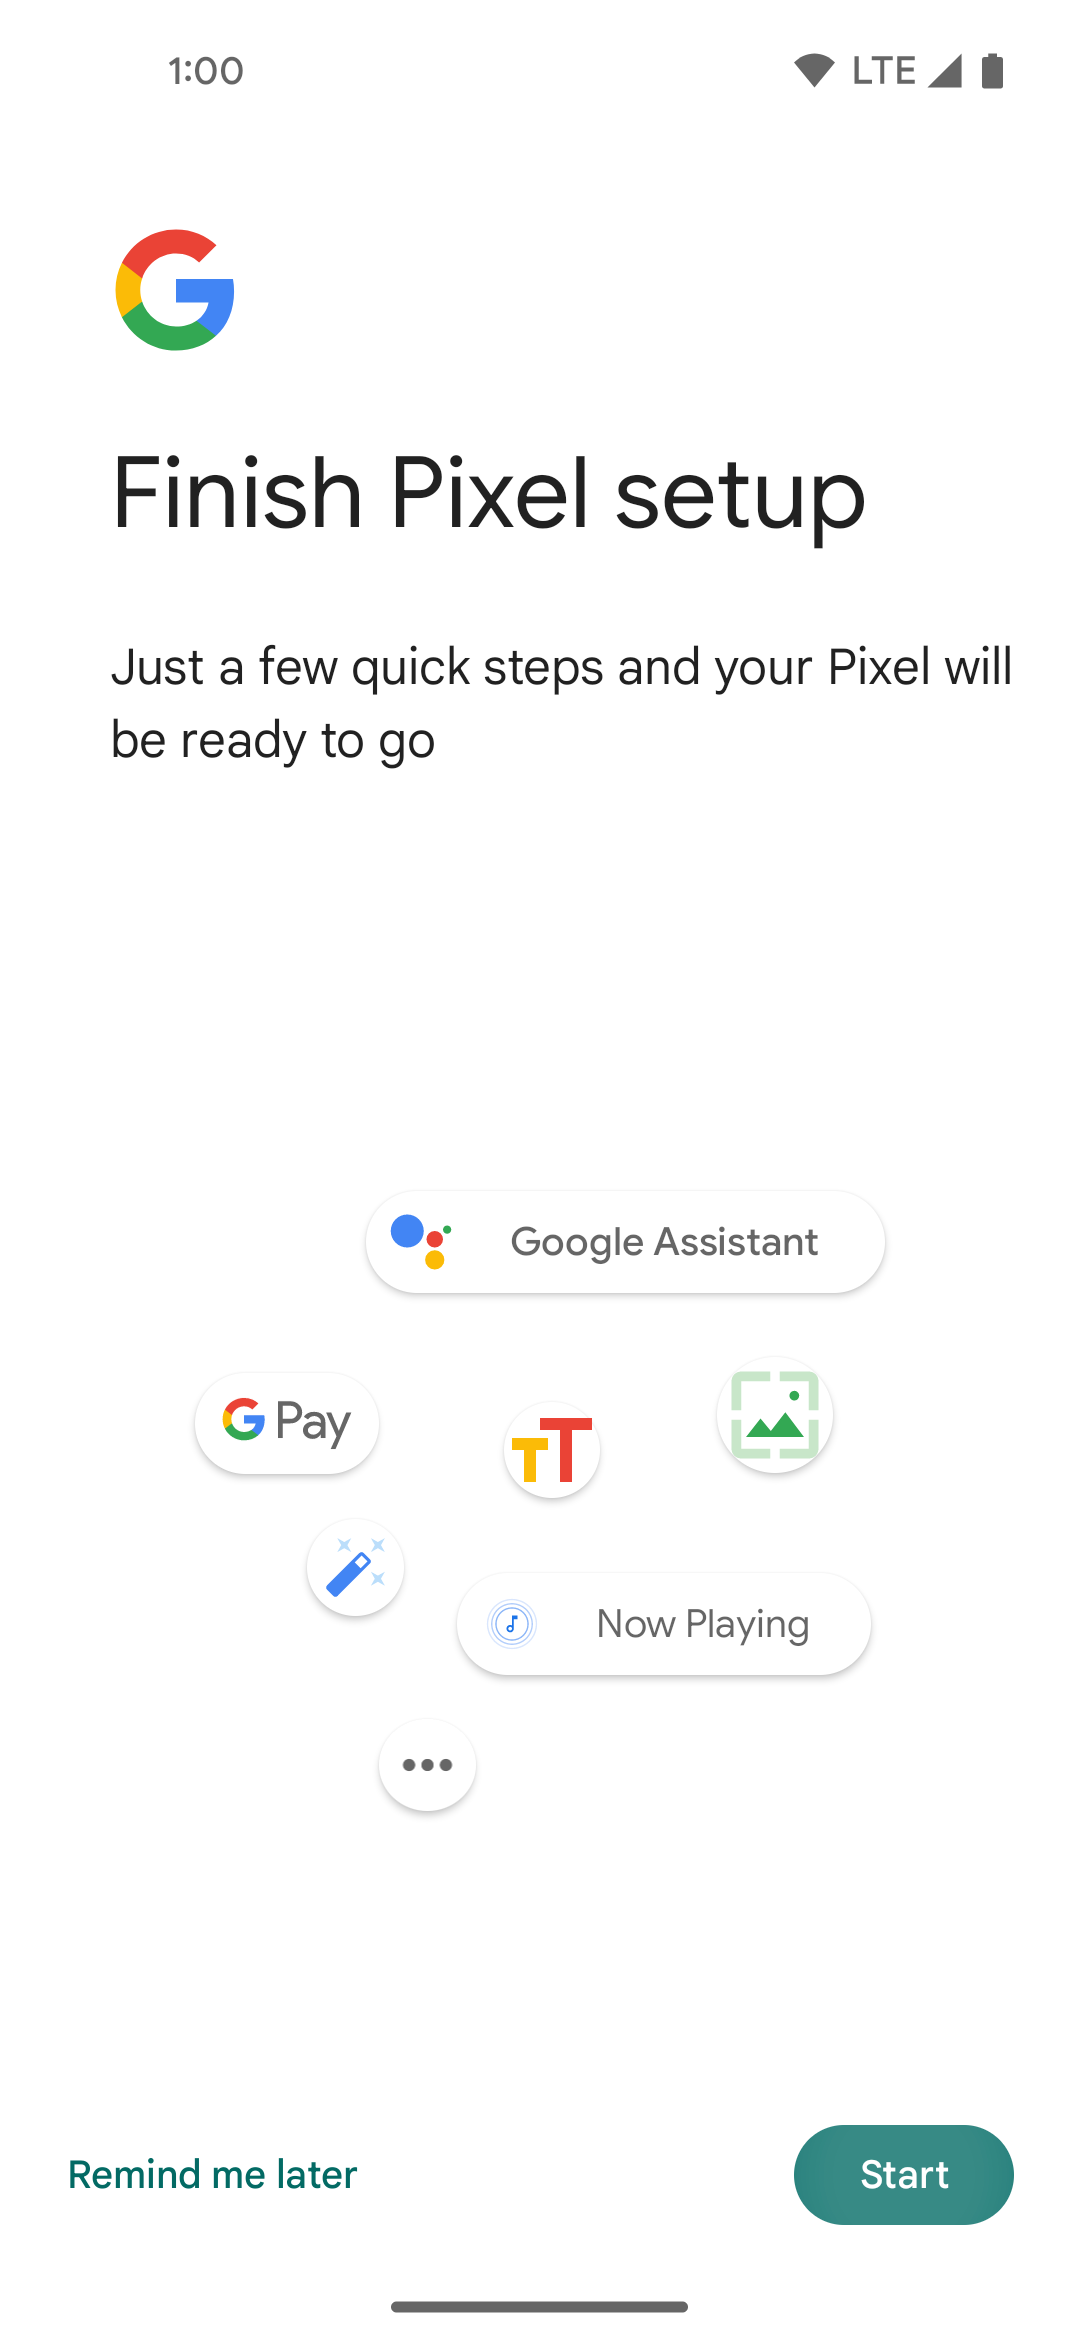 Finishing Google Pixel setup by turning on additional features